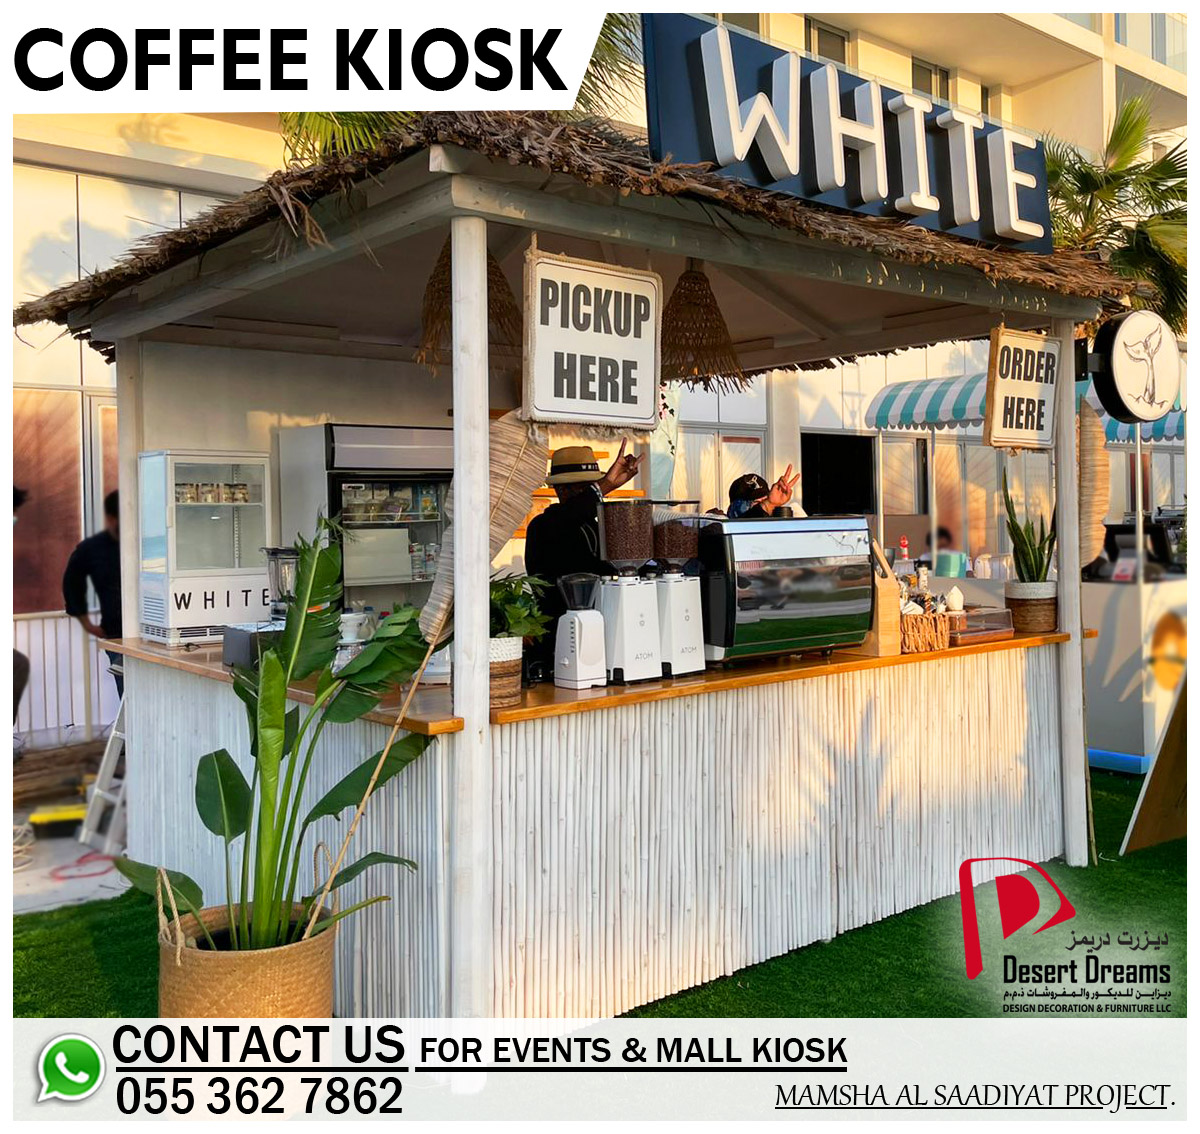 Retails Kiosk Suppliers in Uae | Rental Kiosk | Events Kiosk.